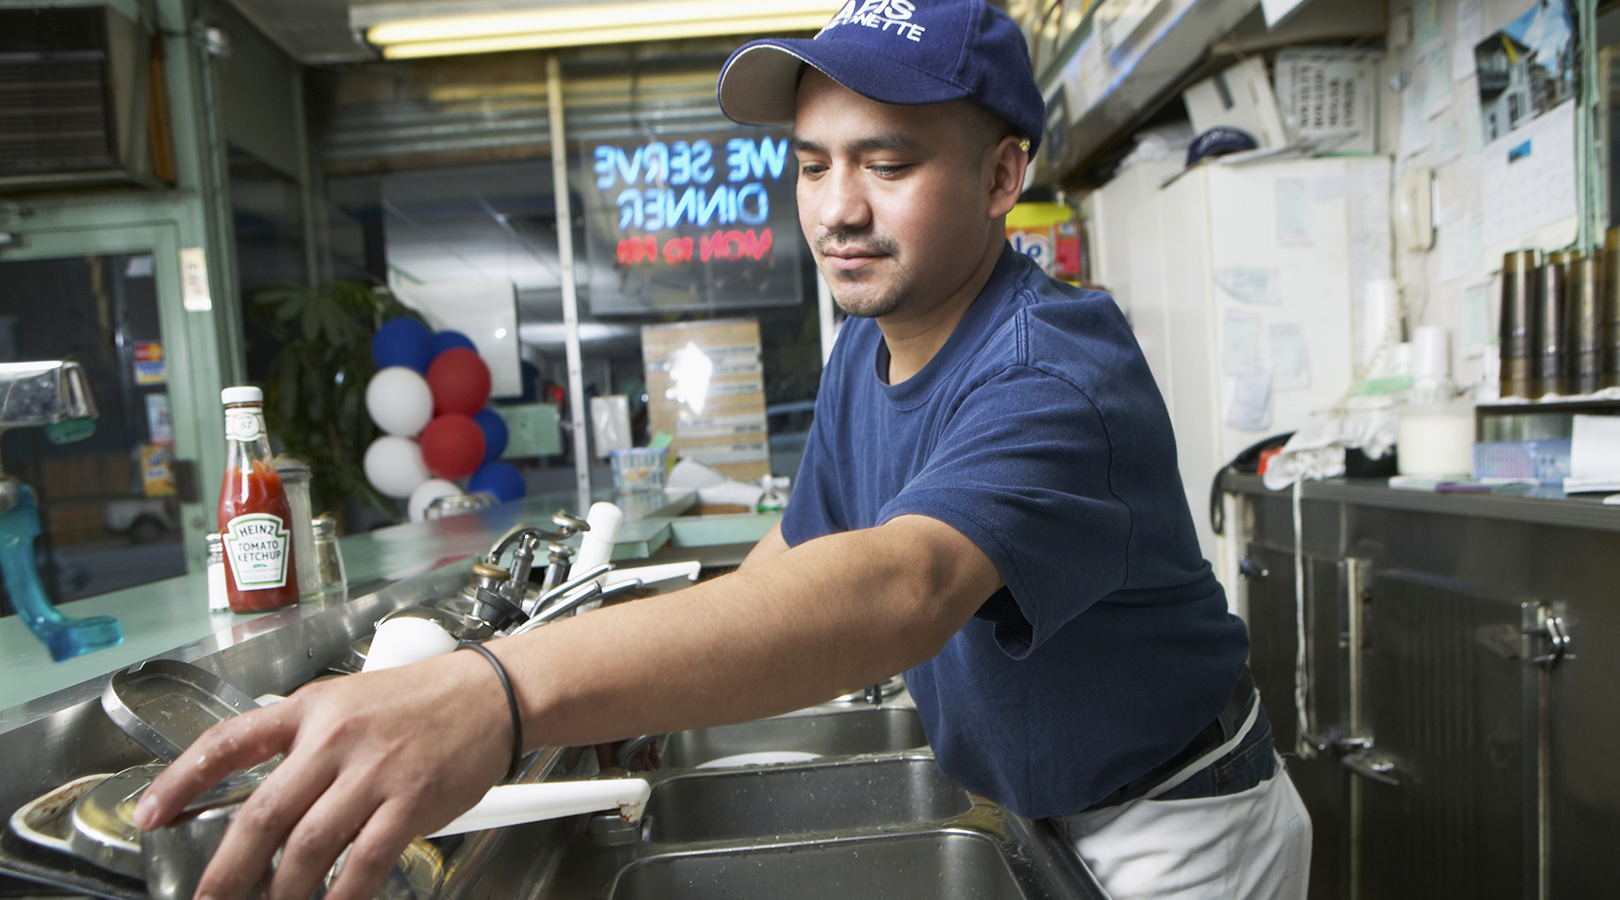 Dishwasher: A man washing dishes behind a café counter